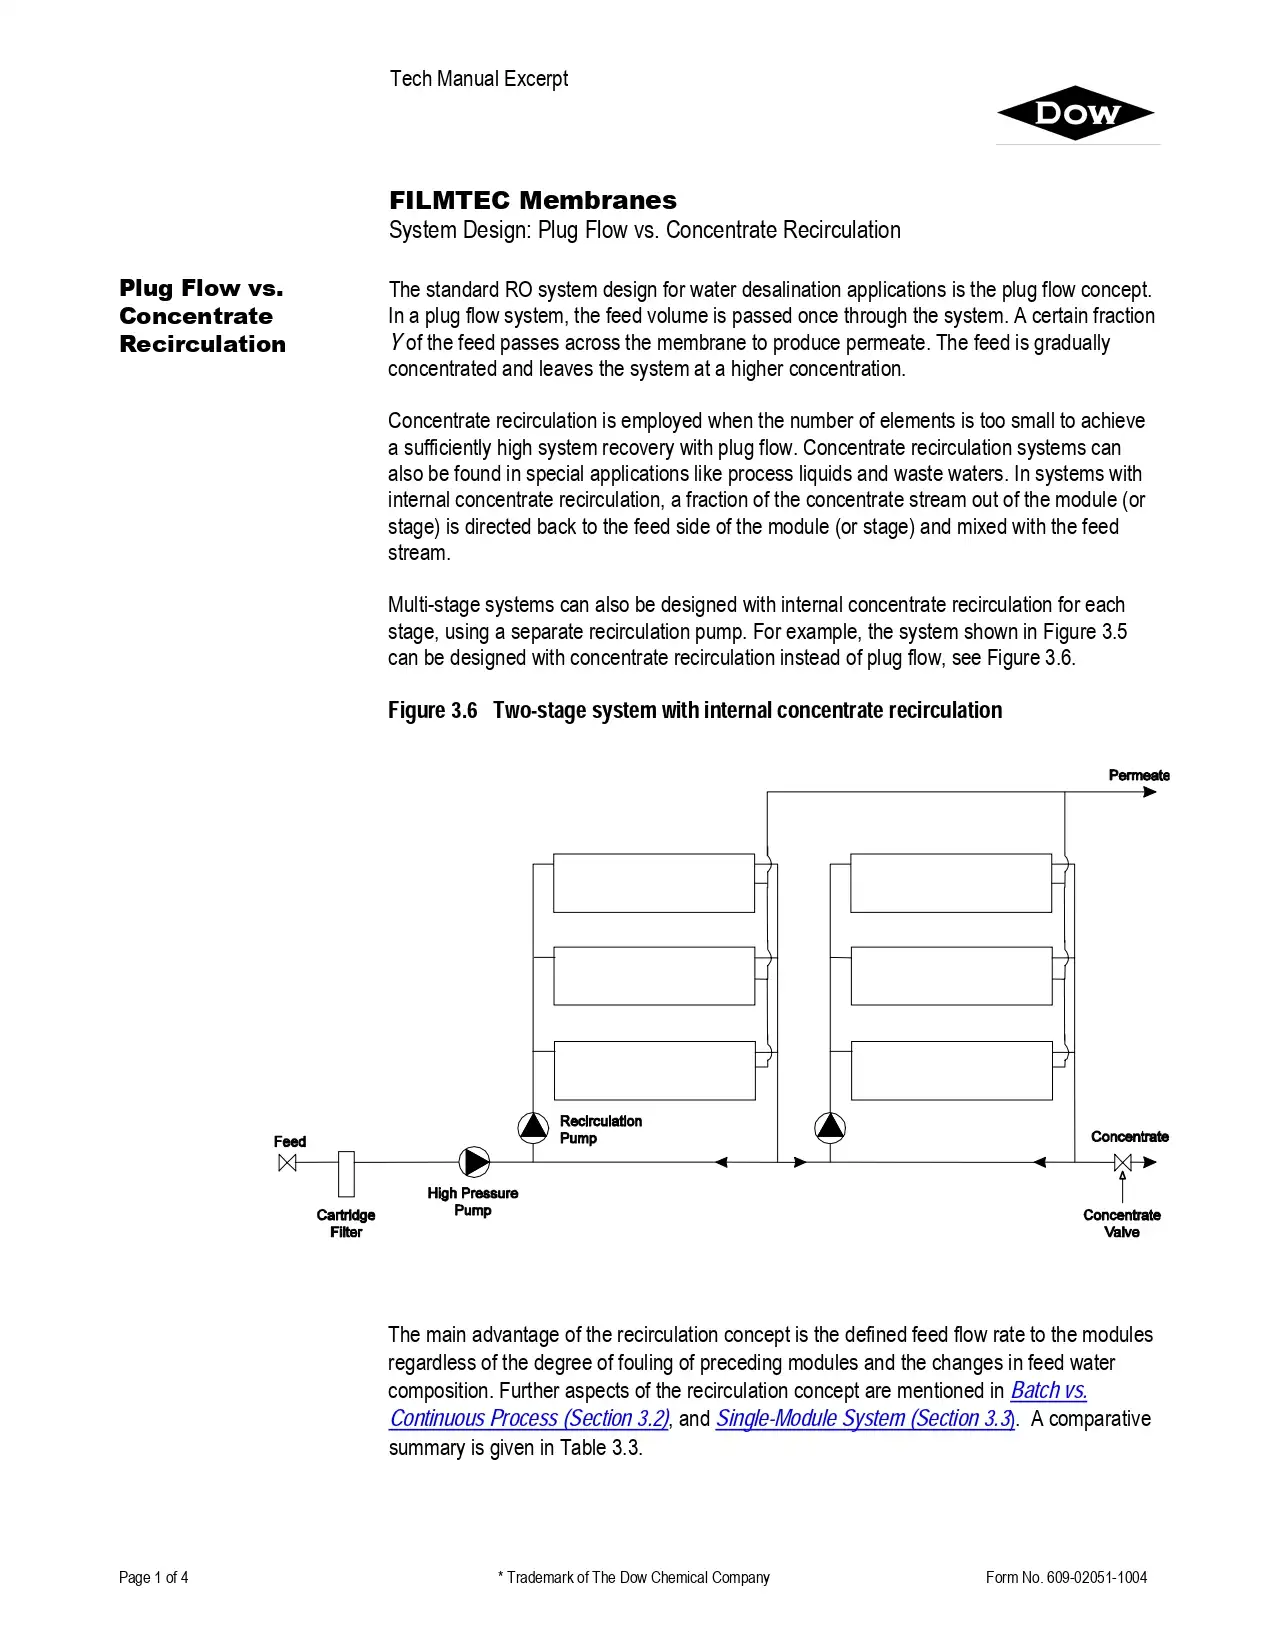 Filmtec Membranes System Design: Plug Flow vs. Concentrate Recirculation